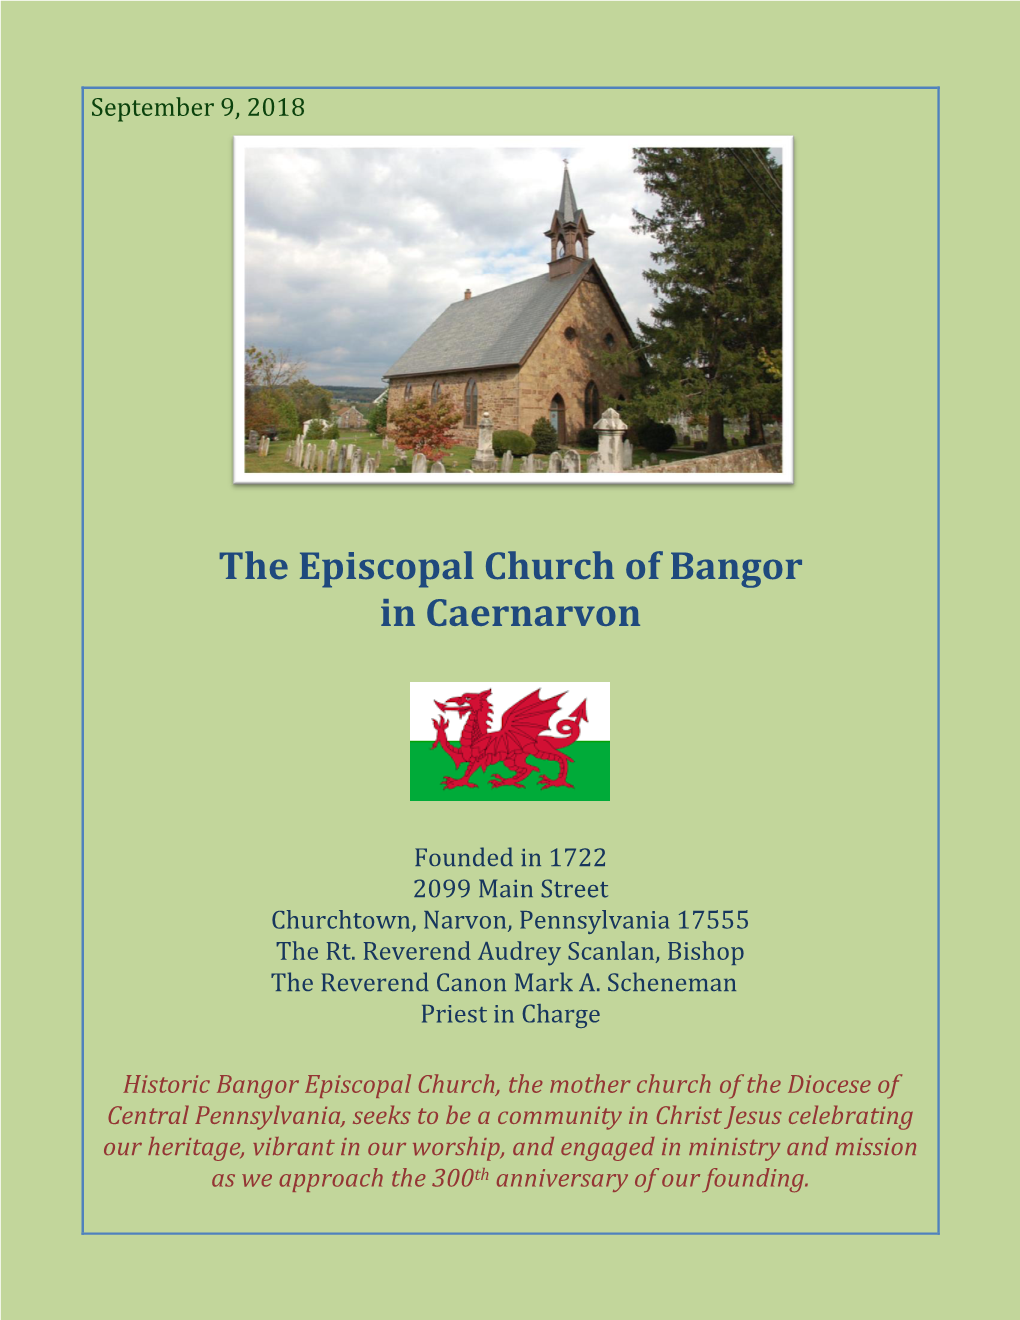 The Episcopal Church of Bangor in Caernarvon